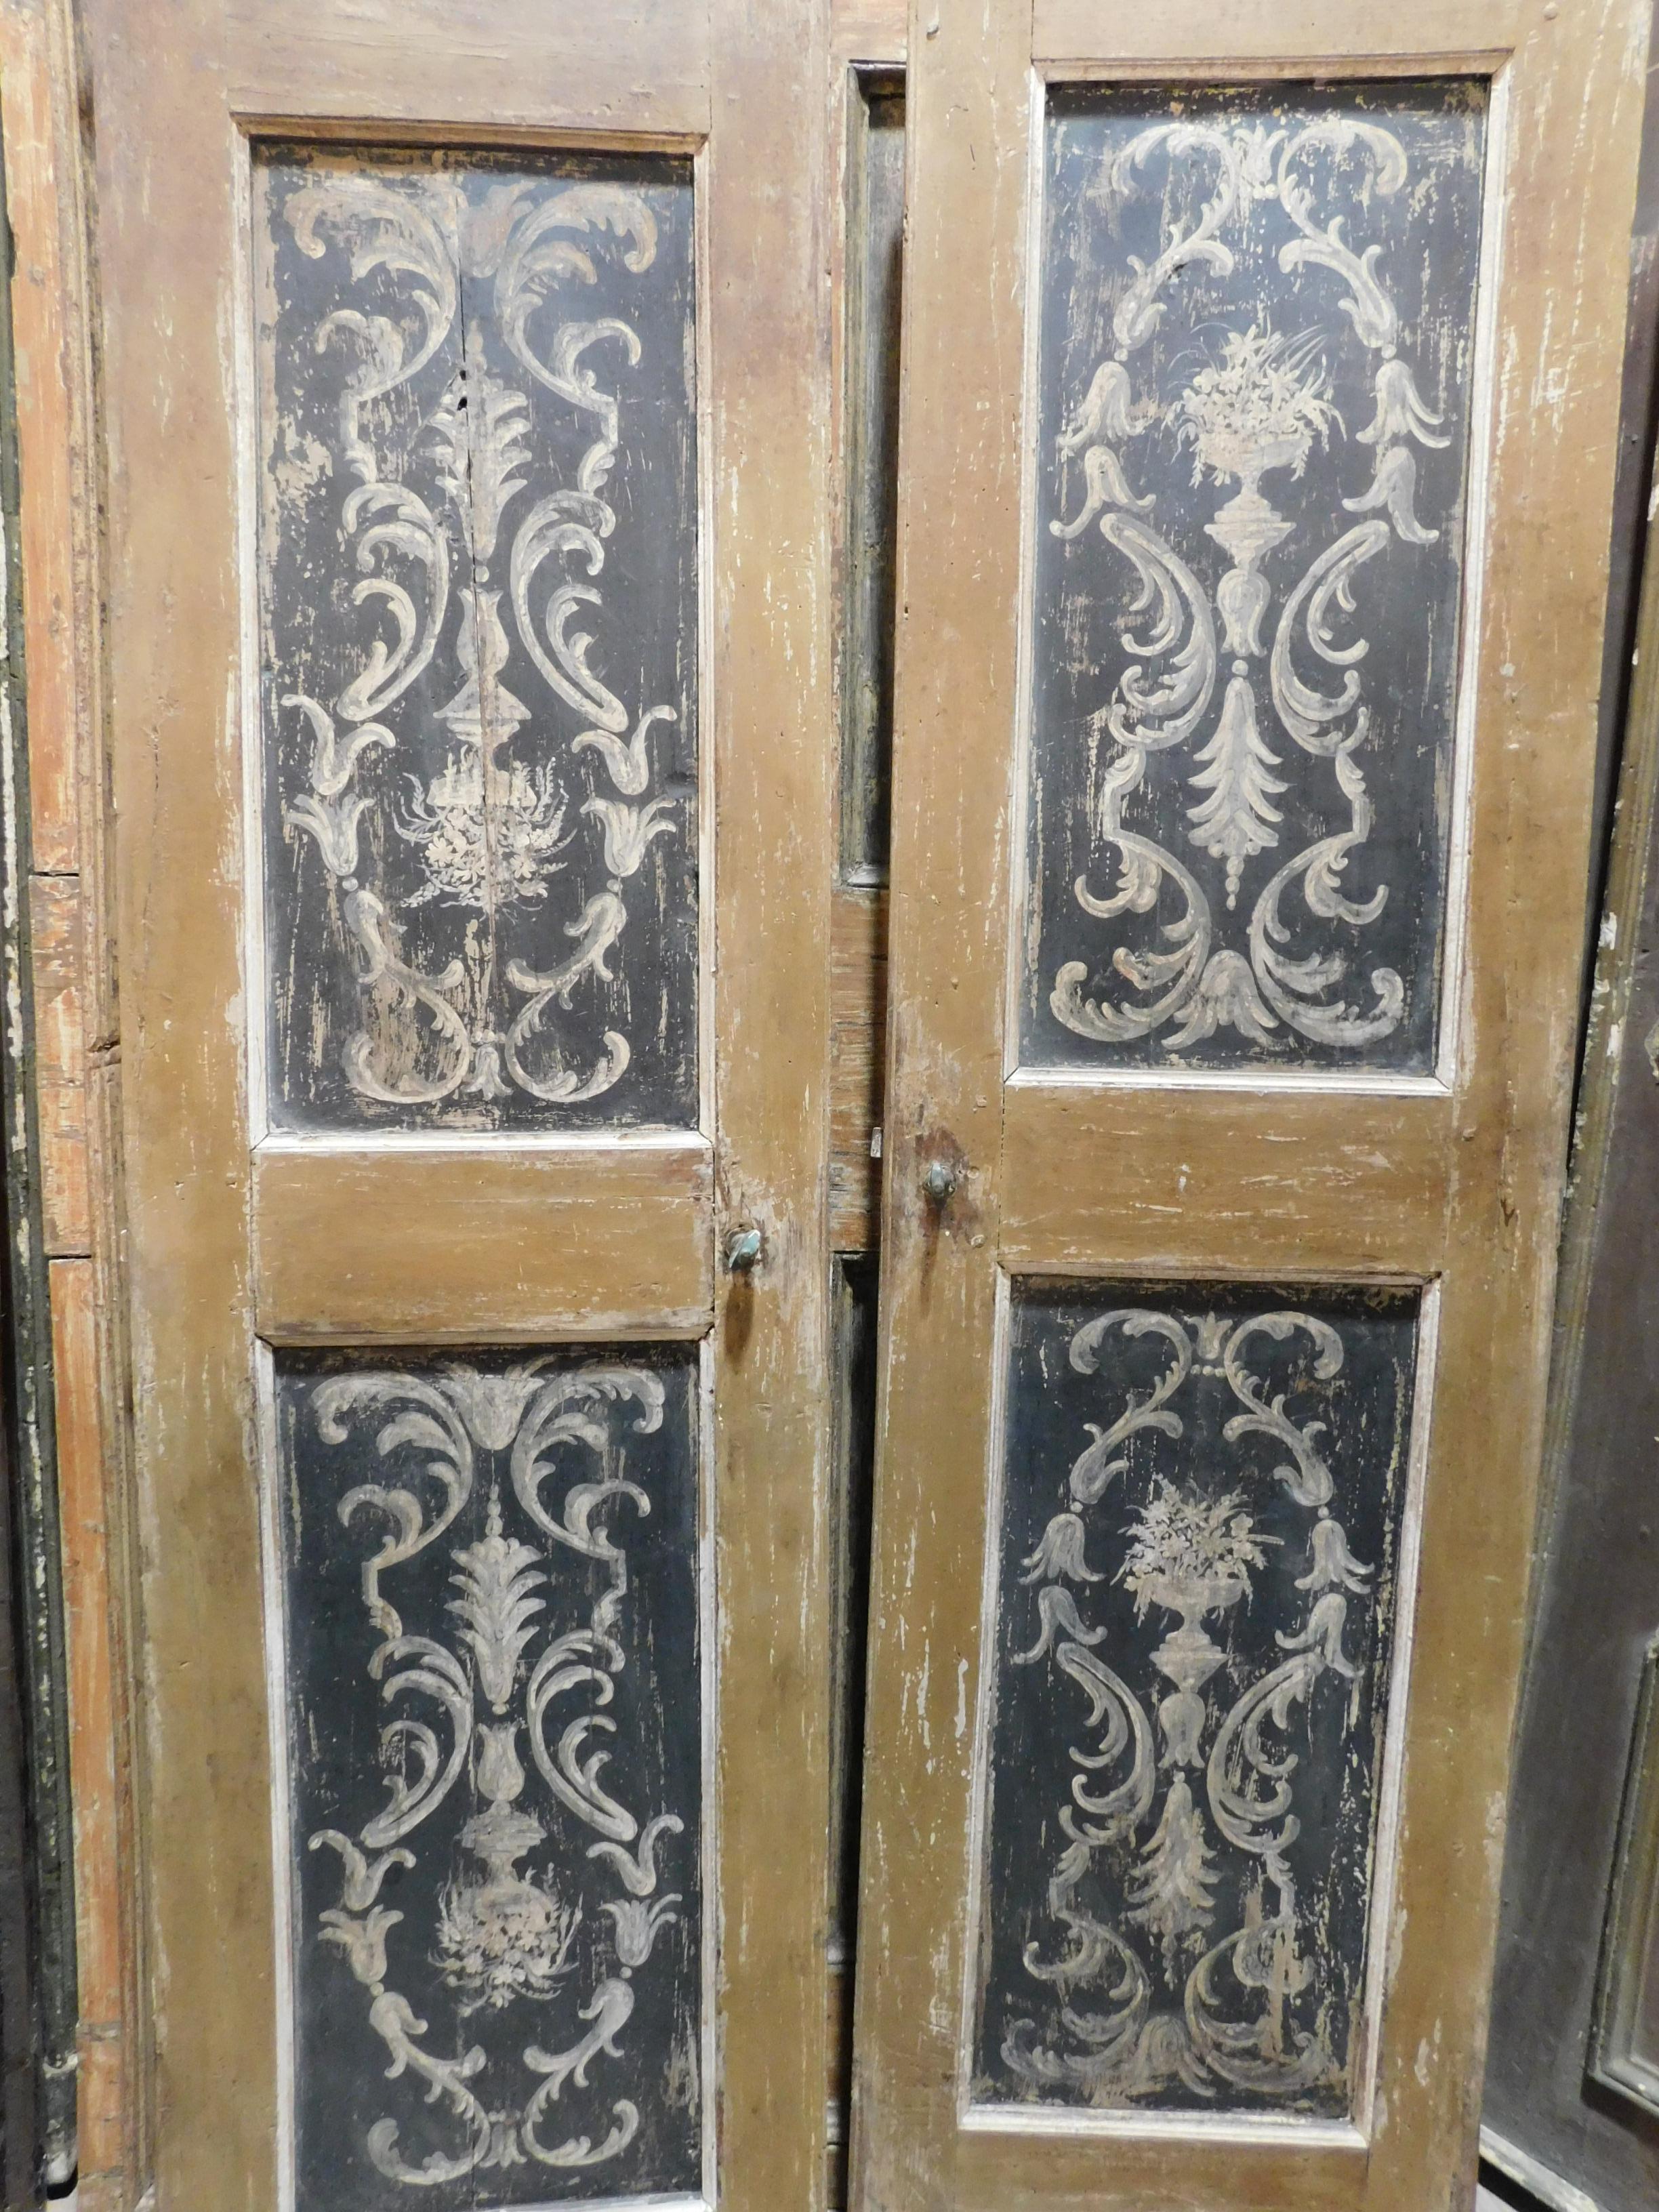 Italian N. 1 Antique Double-Leaf Doors, Hand Painted Orange Black, 18th Century, Italy